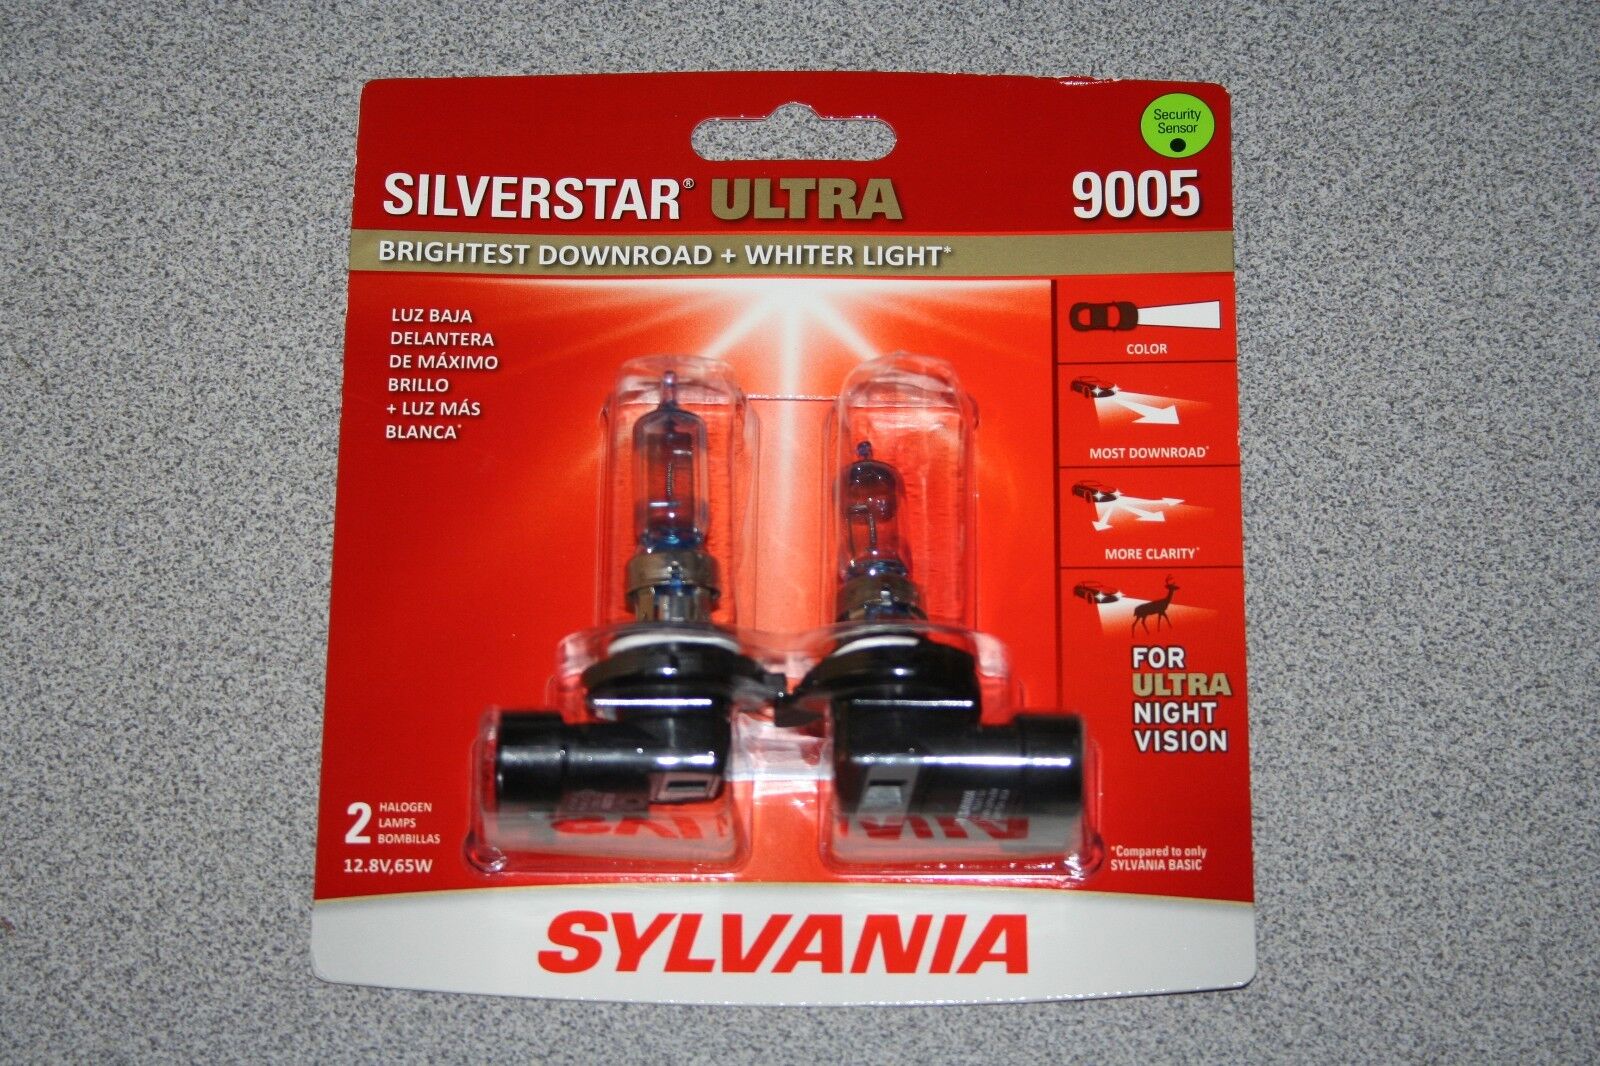 Sylvania Silverstar ULTRA 9005 Pair Set High Performance Headlight 2 Bulbs NEW